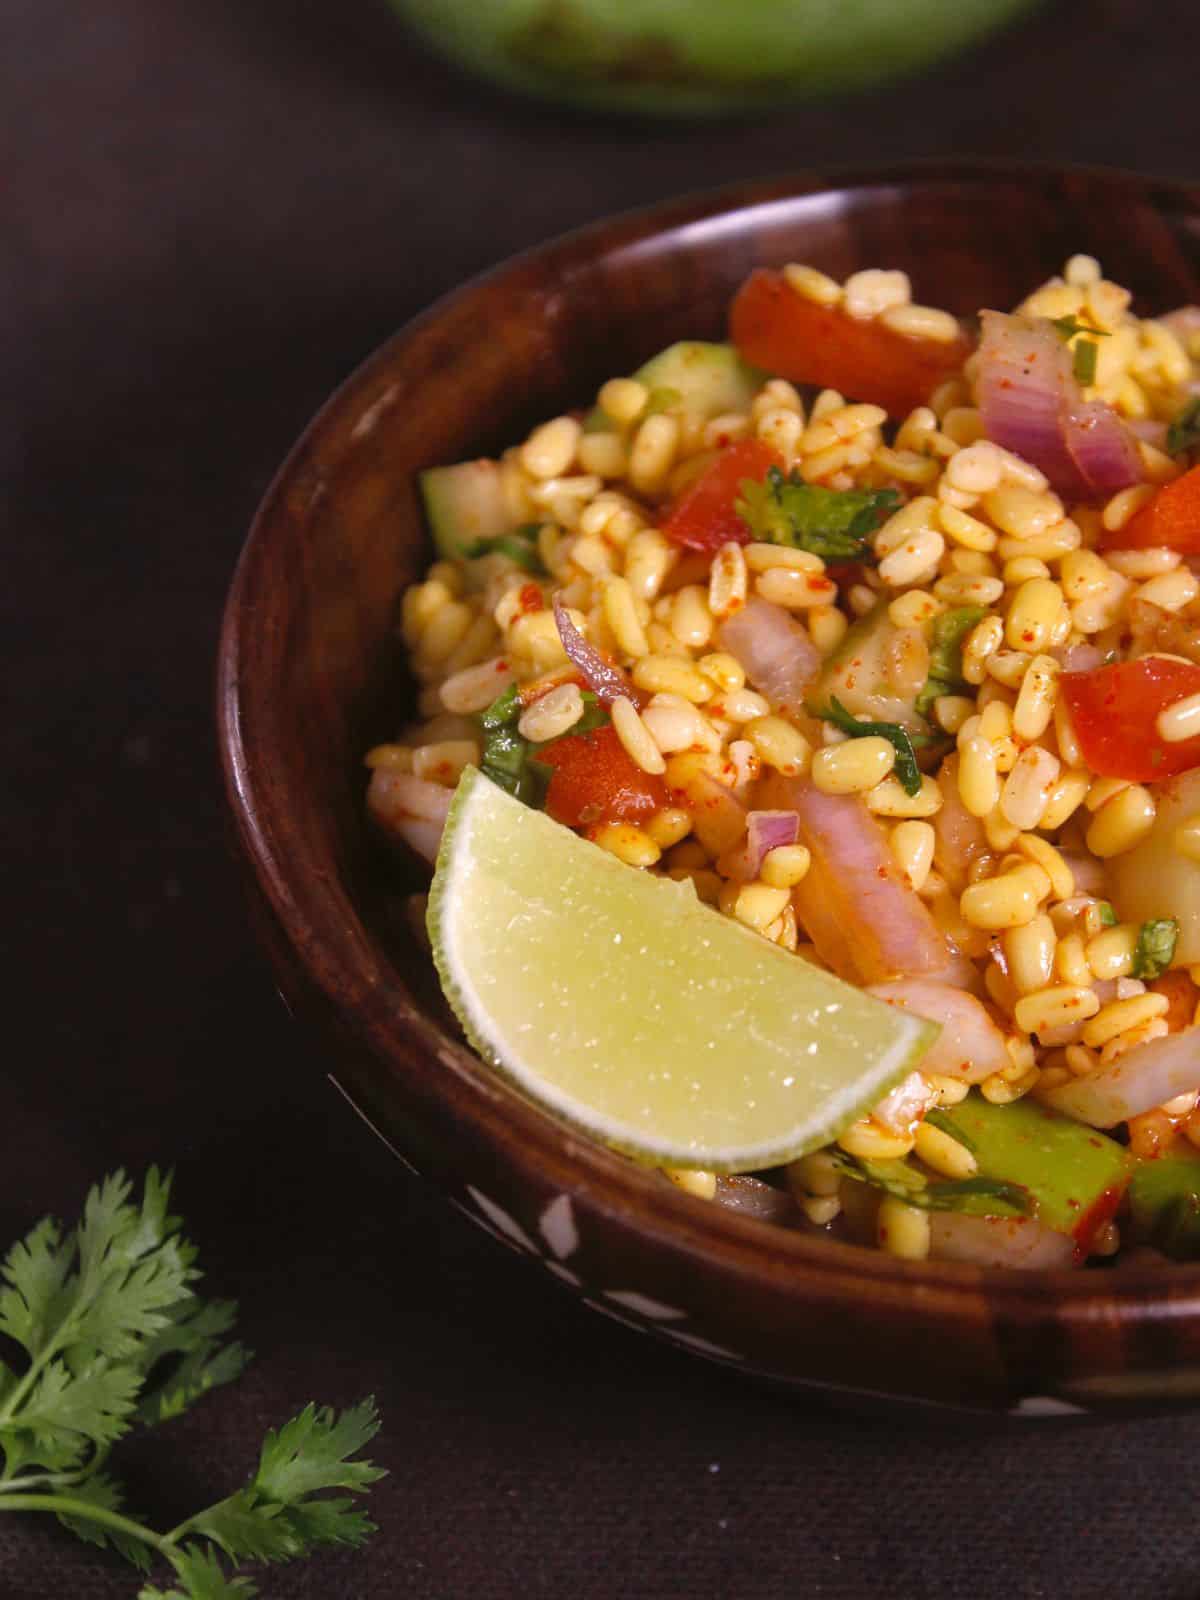 serve with lemon slice and enjoy yummy vegan yellow lentil salad